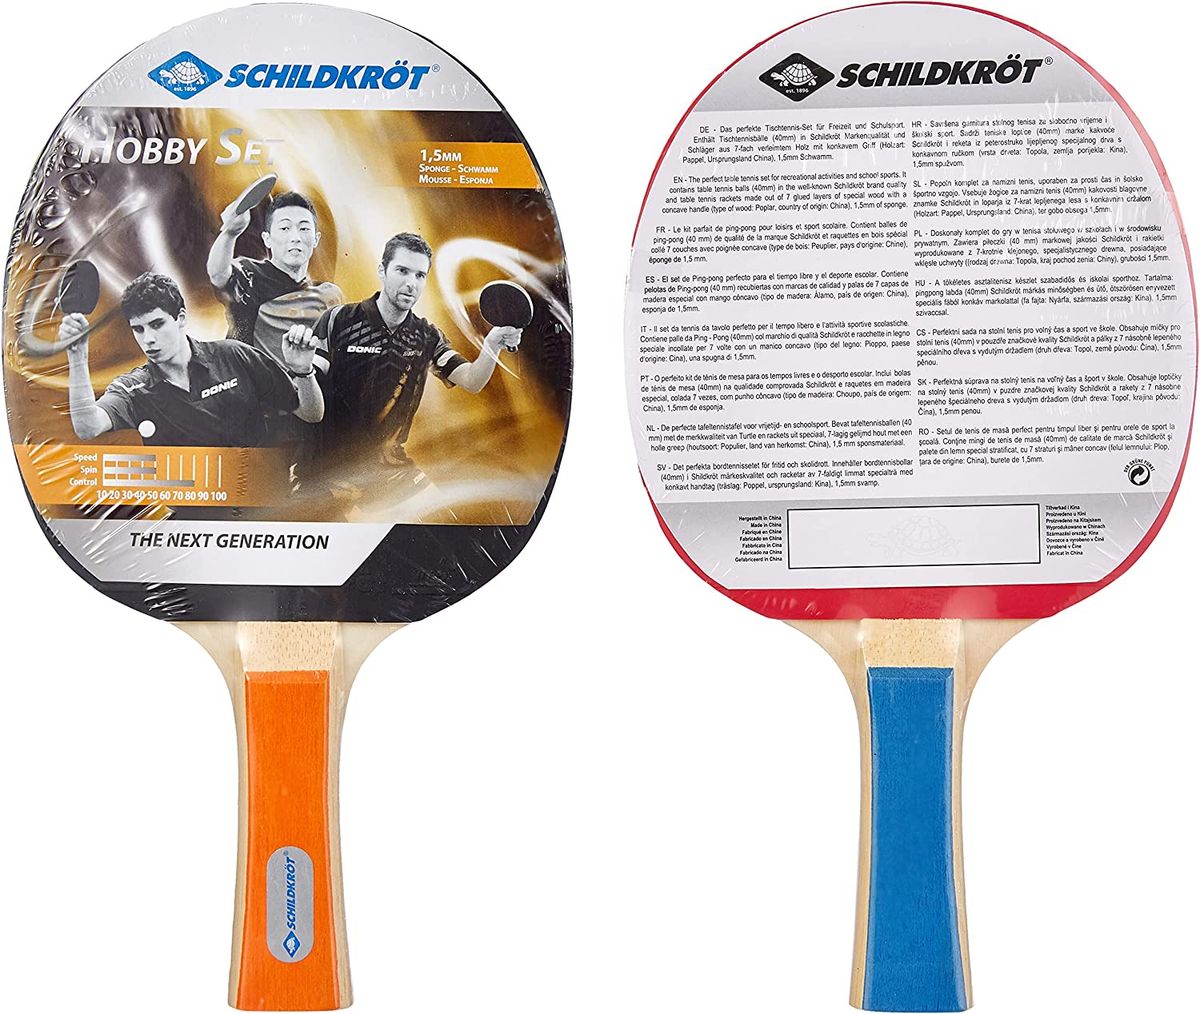 GoSports 55mm XL Table Tennis Balls 12 Pack –